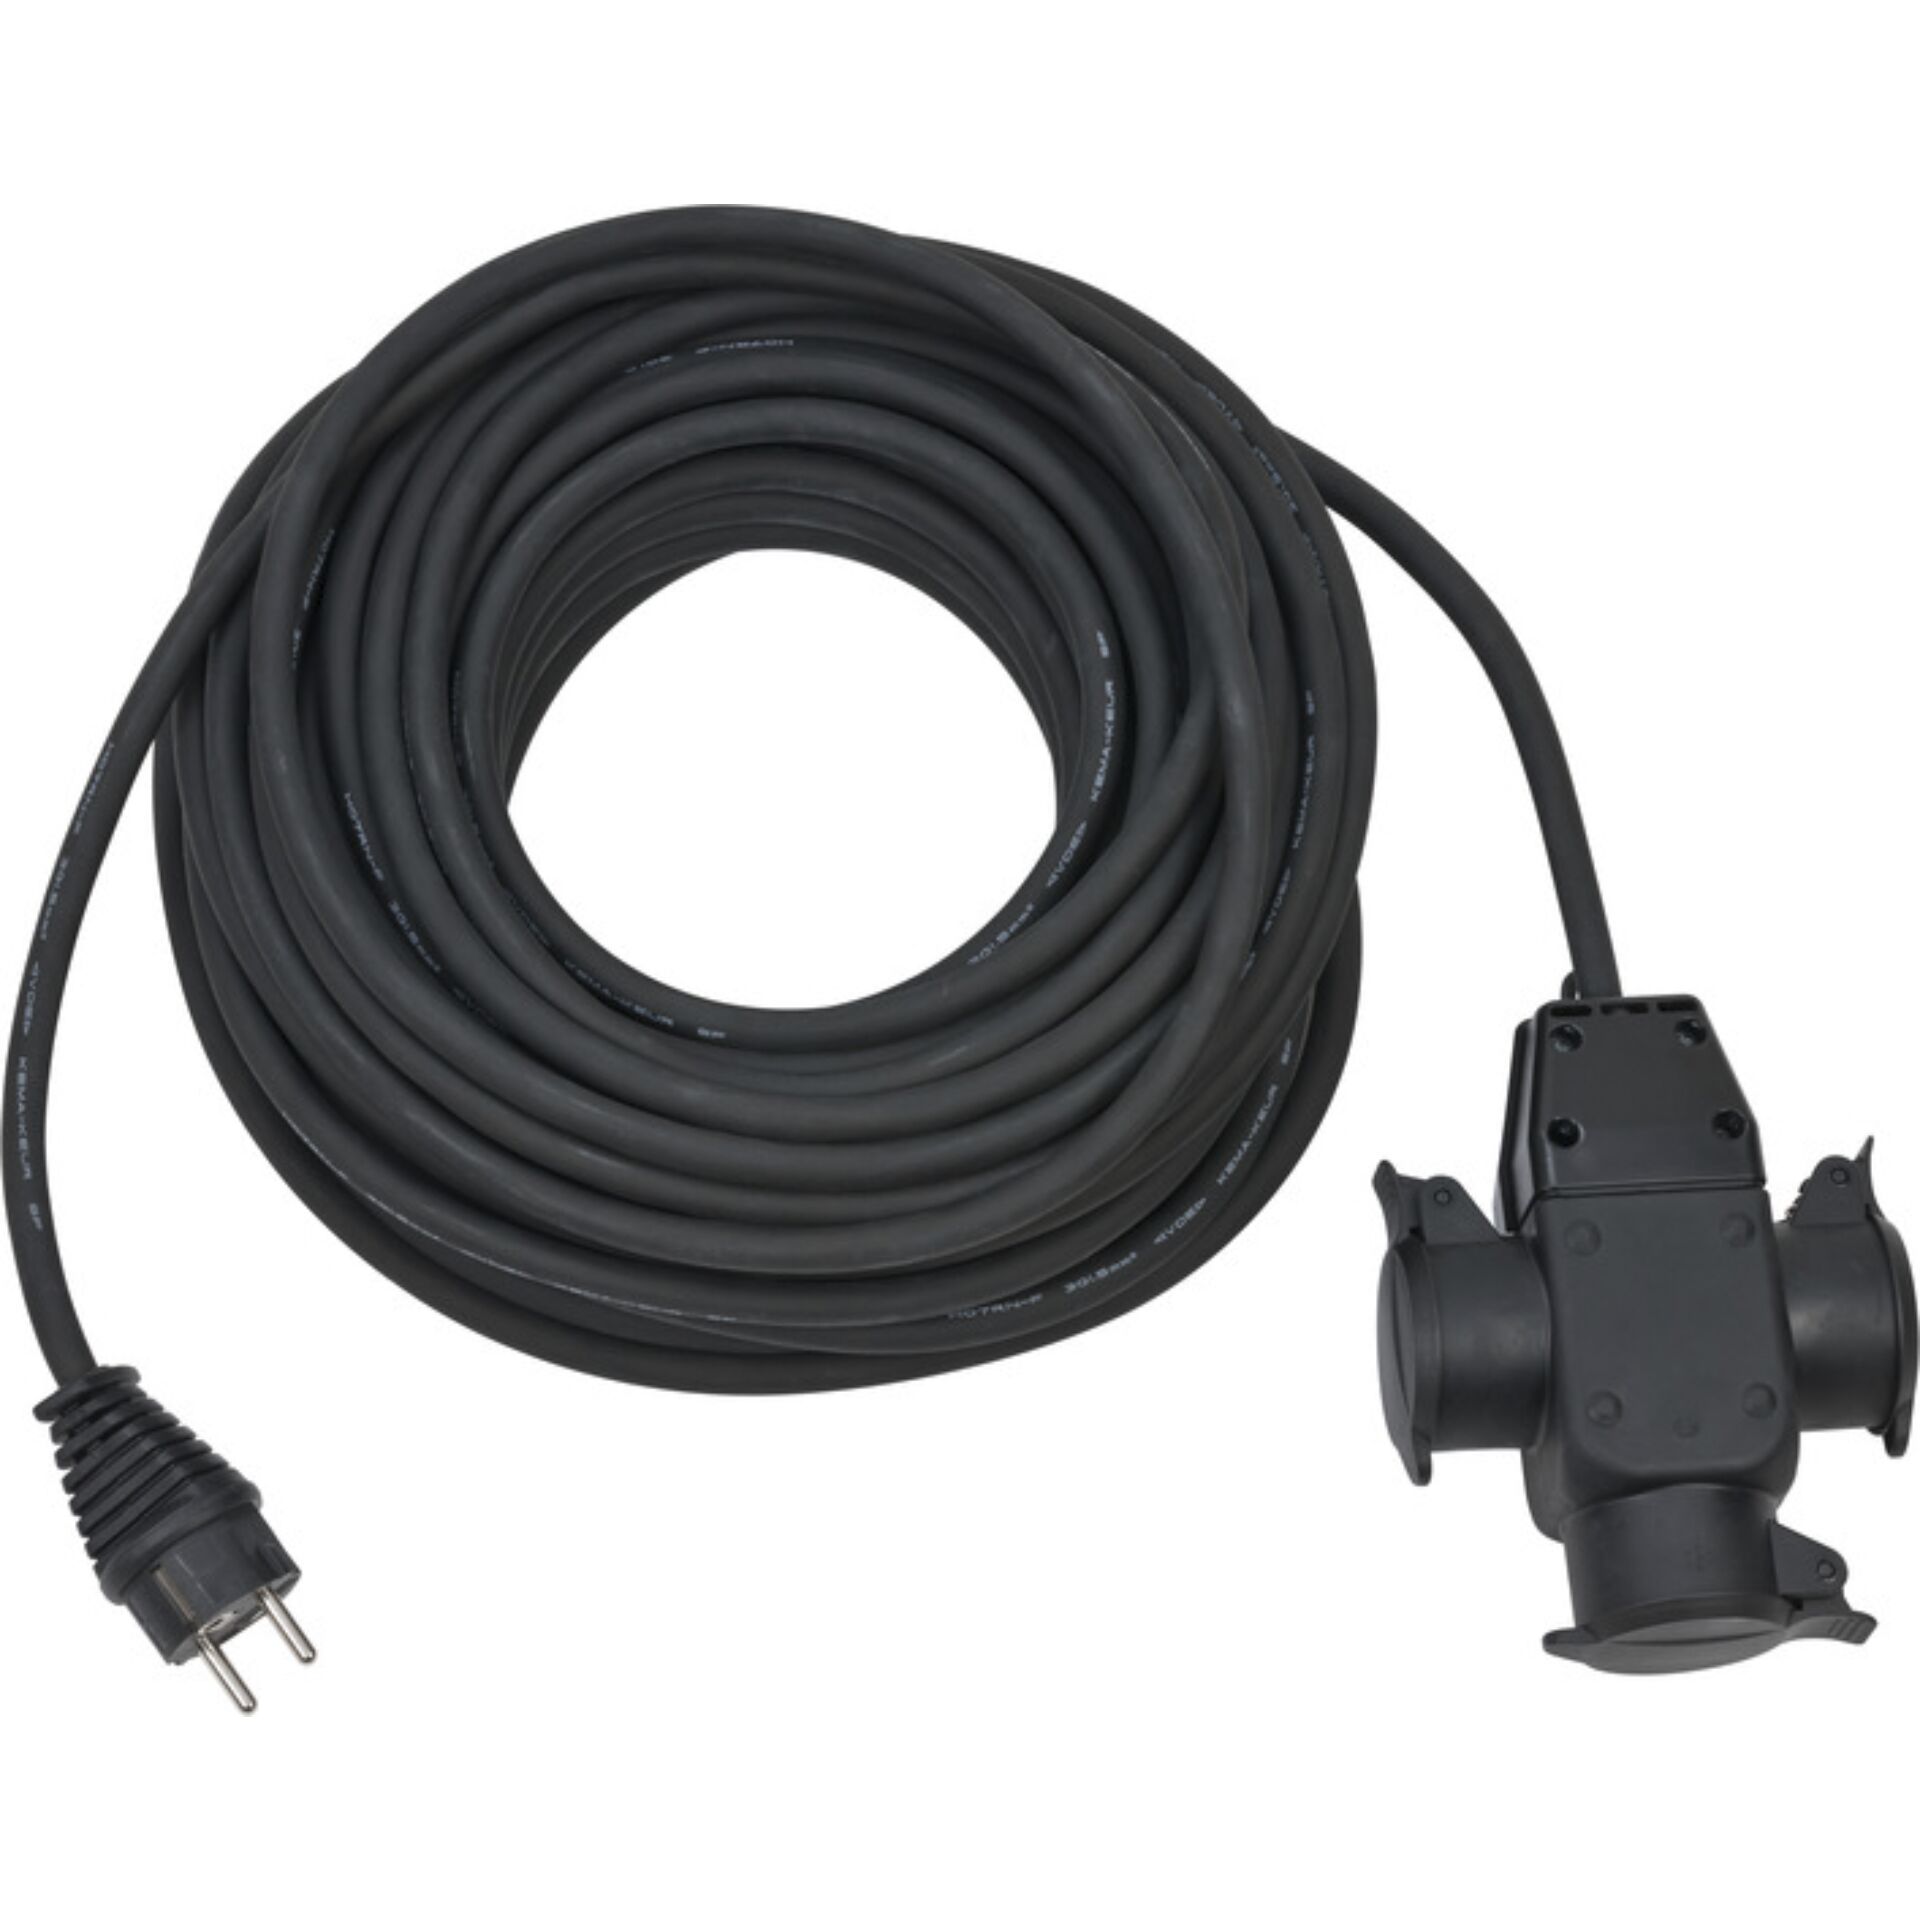 Brennenstuhl Extension Cable 25m H07RN-F3G1,5 black IP44